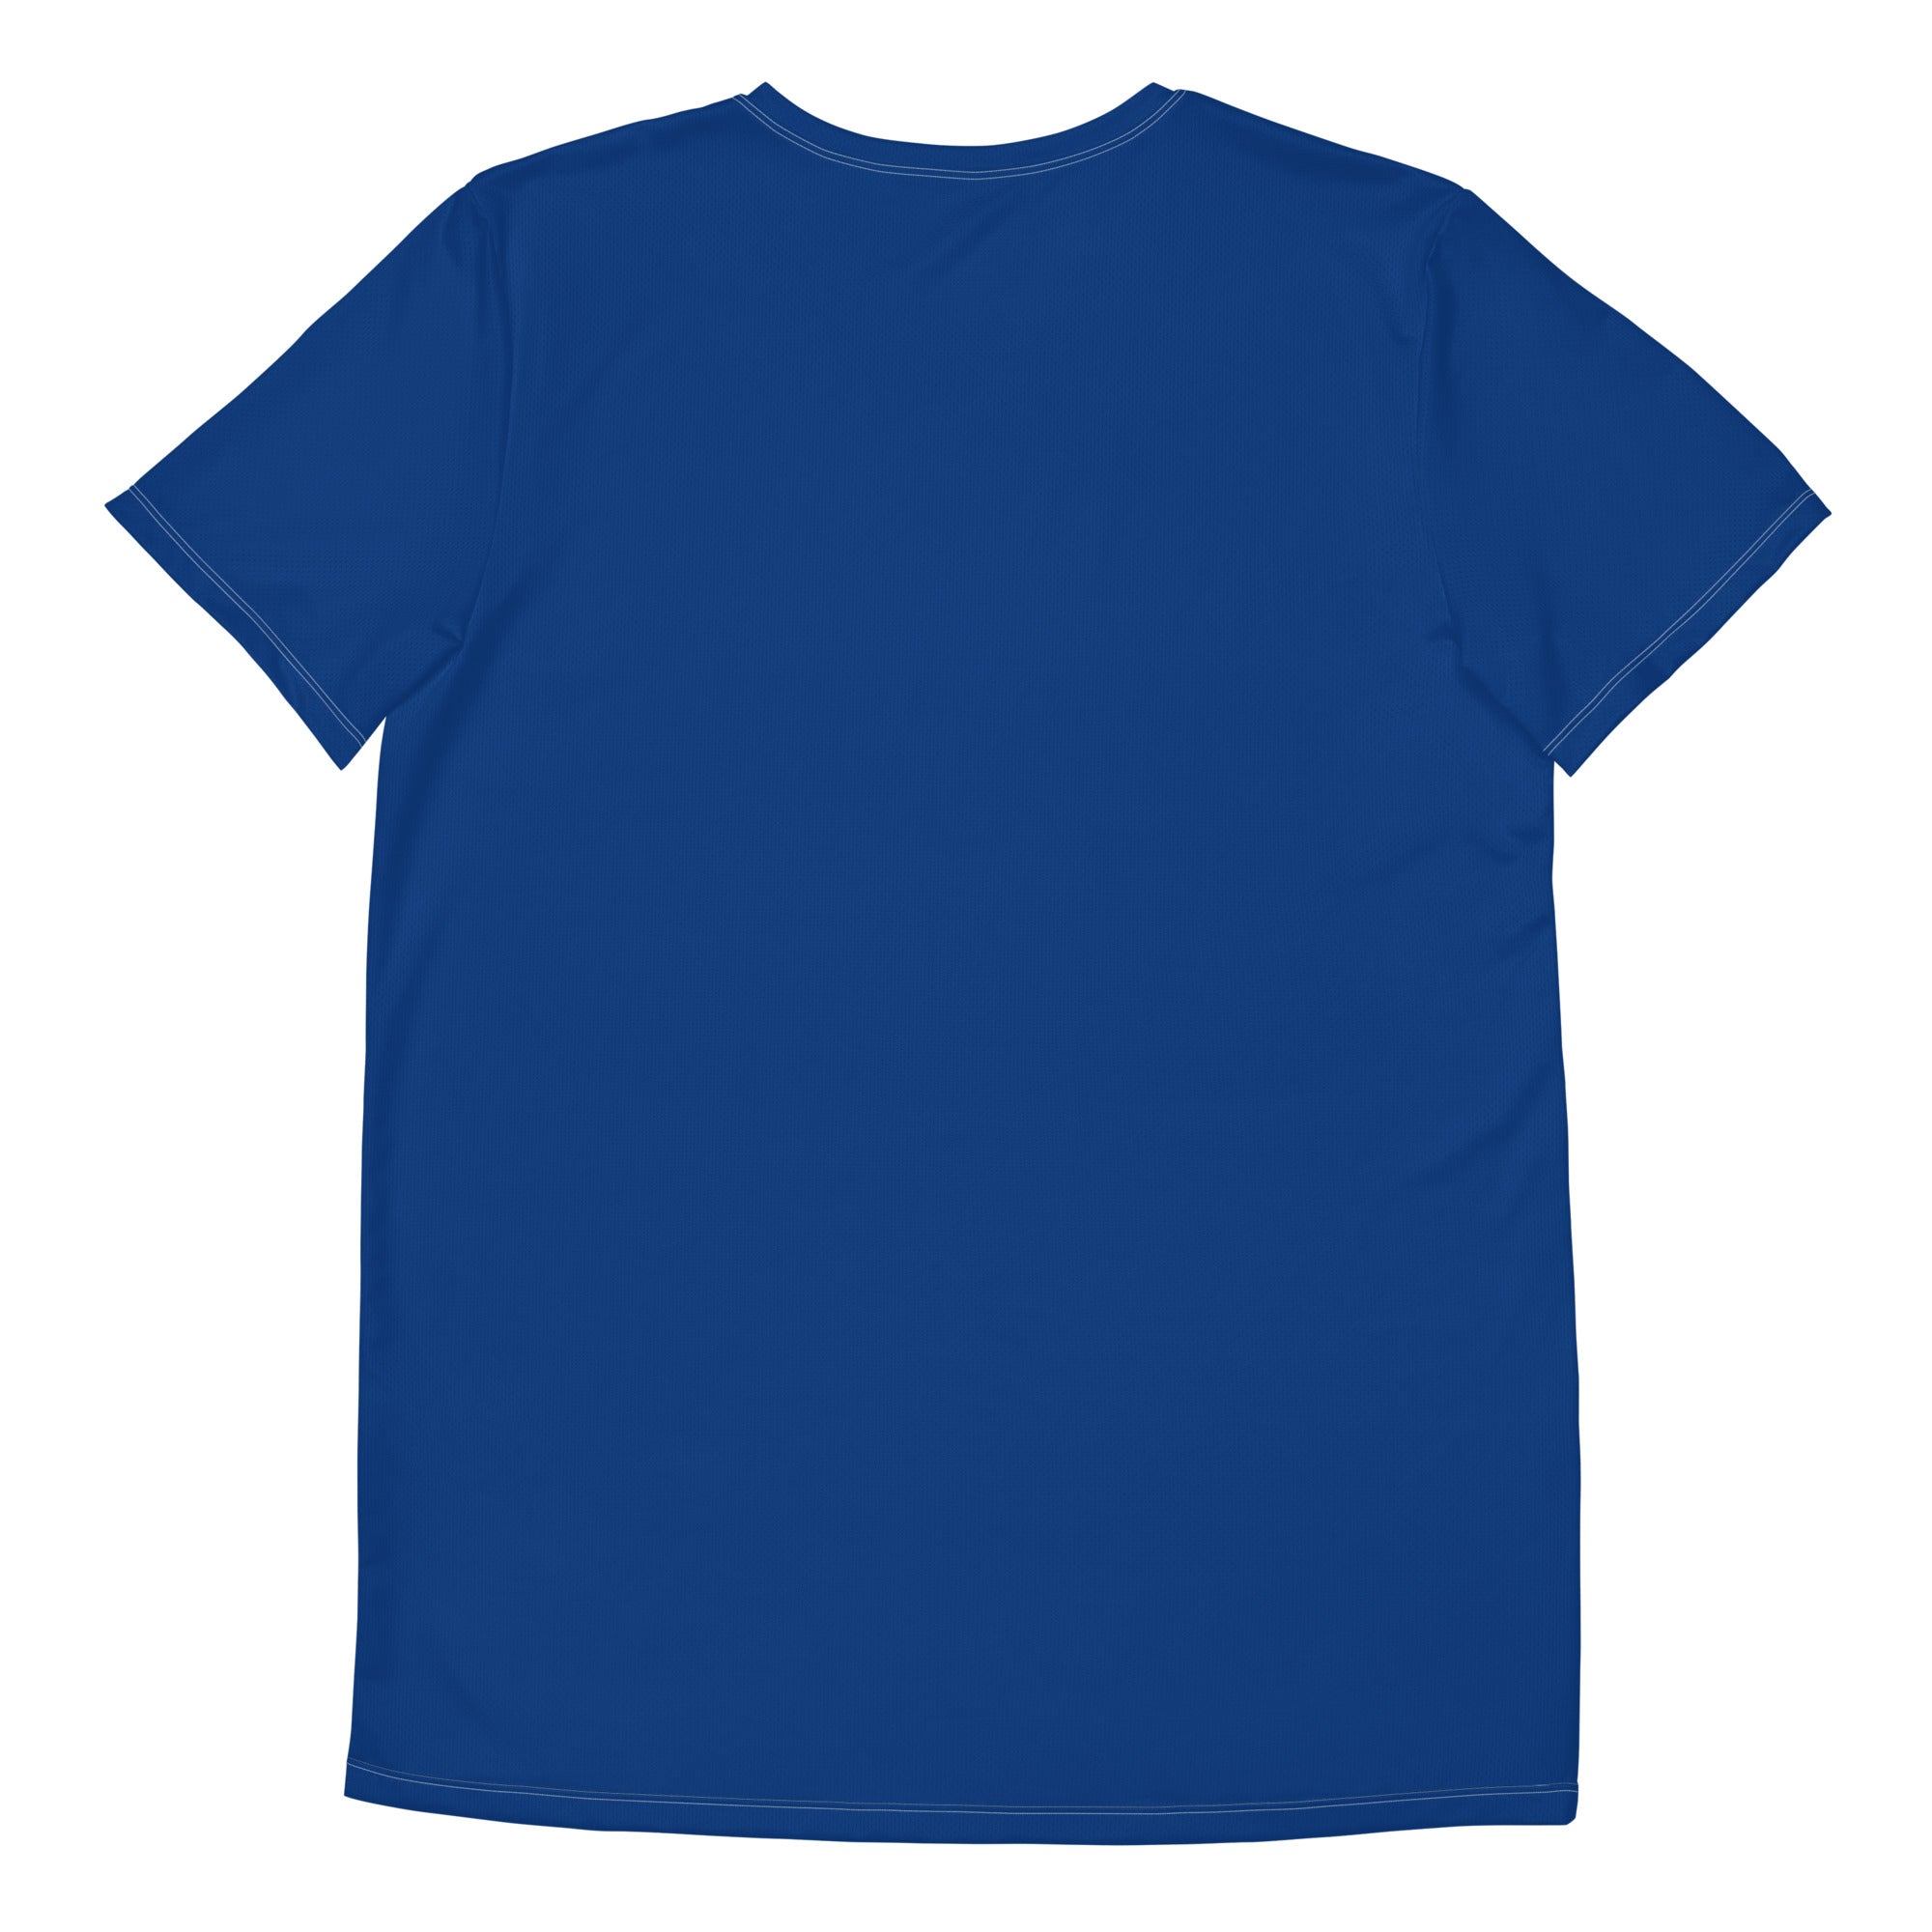 Traphagen All-Over Print Men's Athletic T-shirt V1